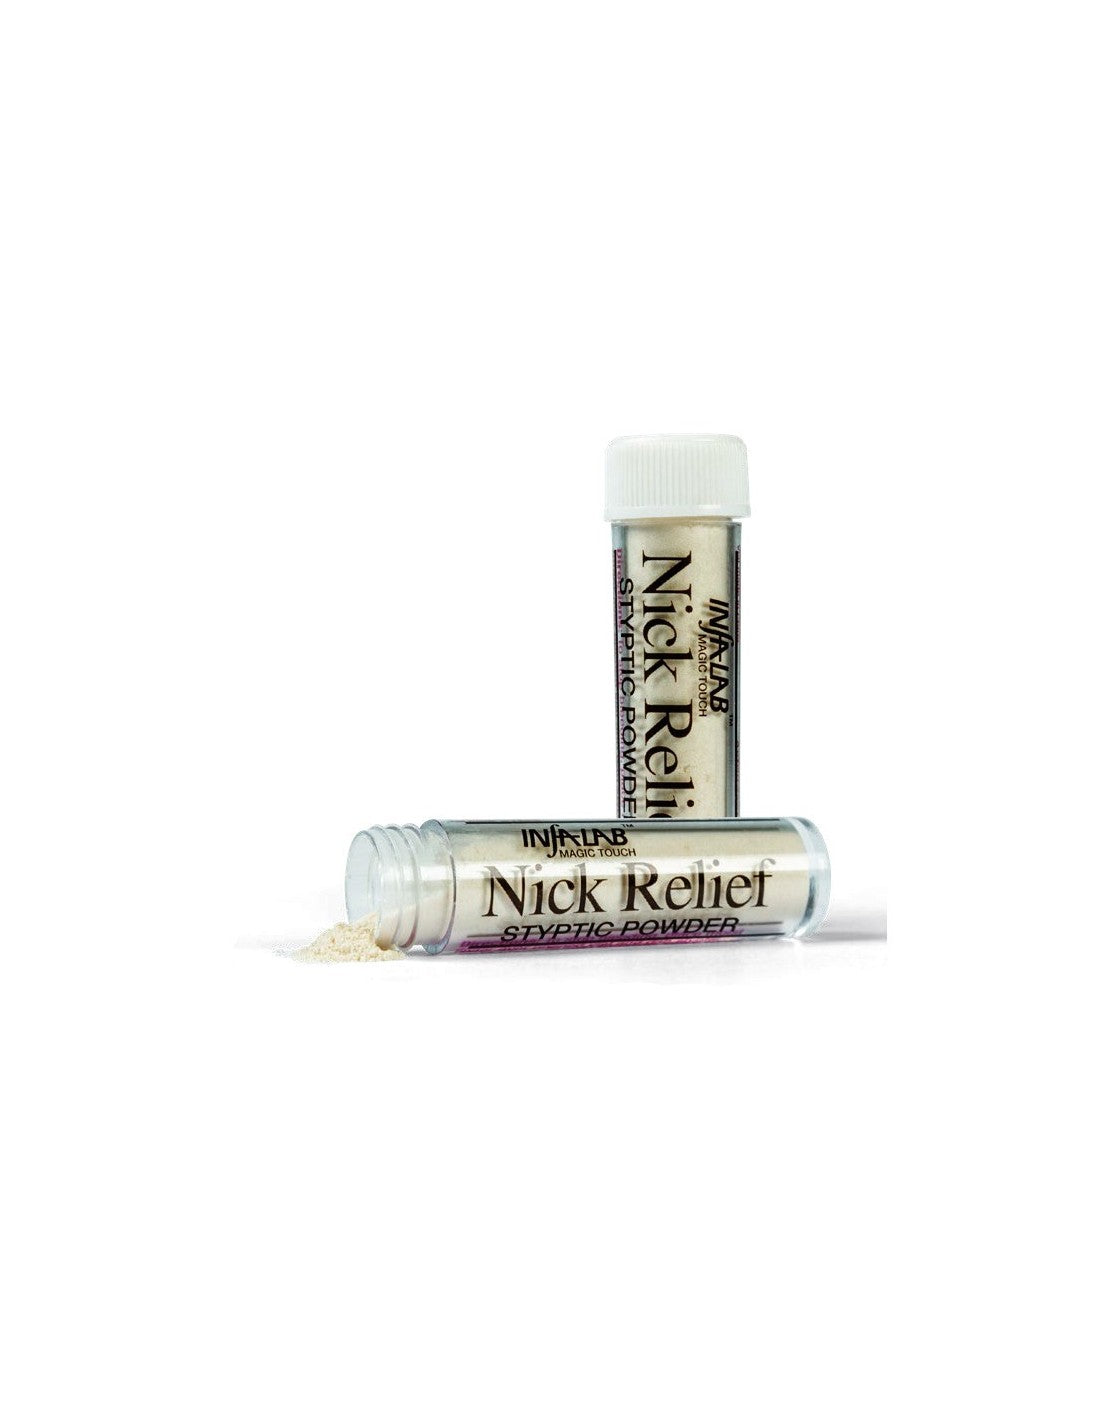 Nick Relief Styptic Powder 3g